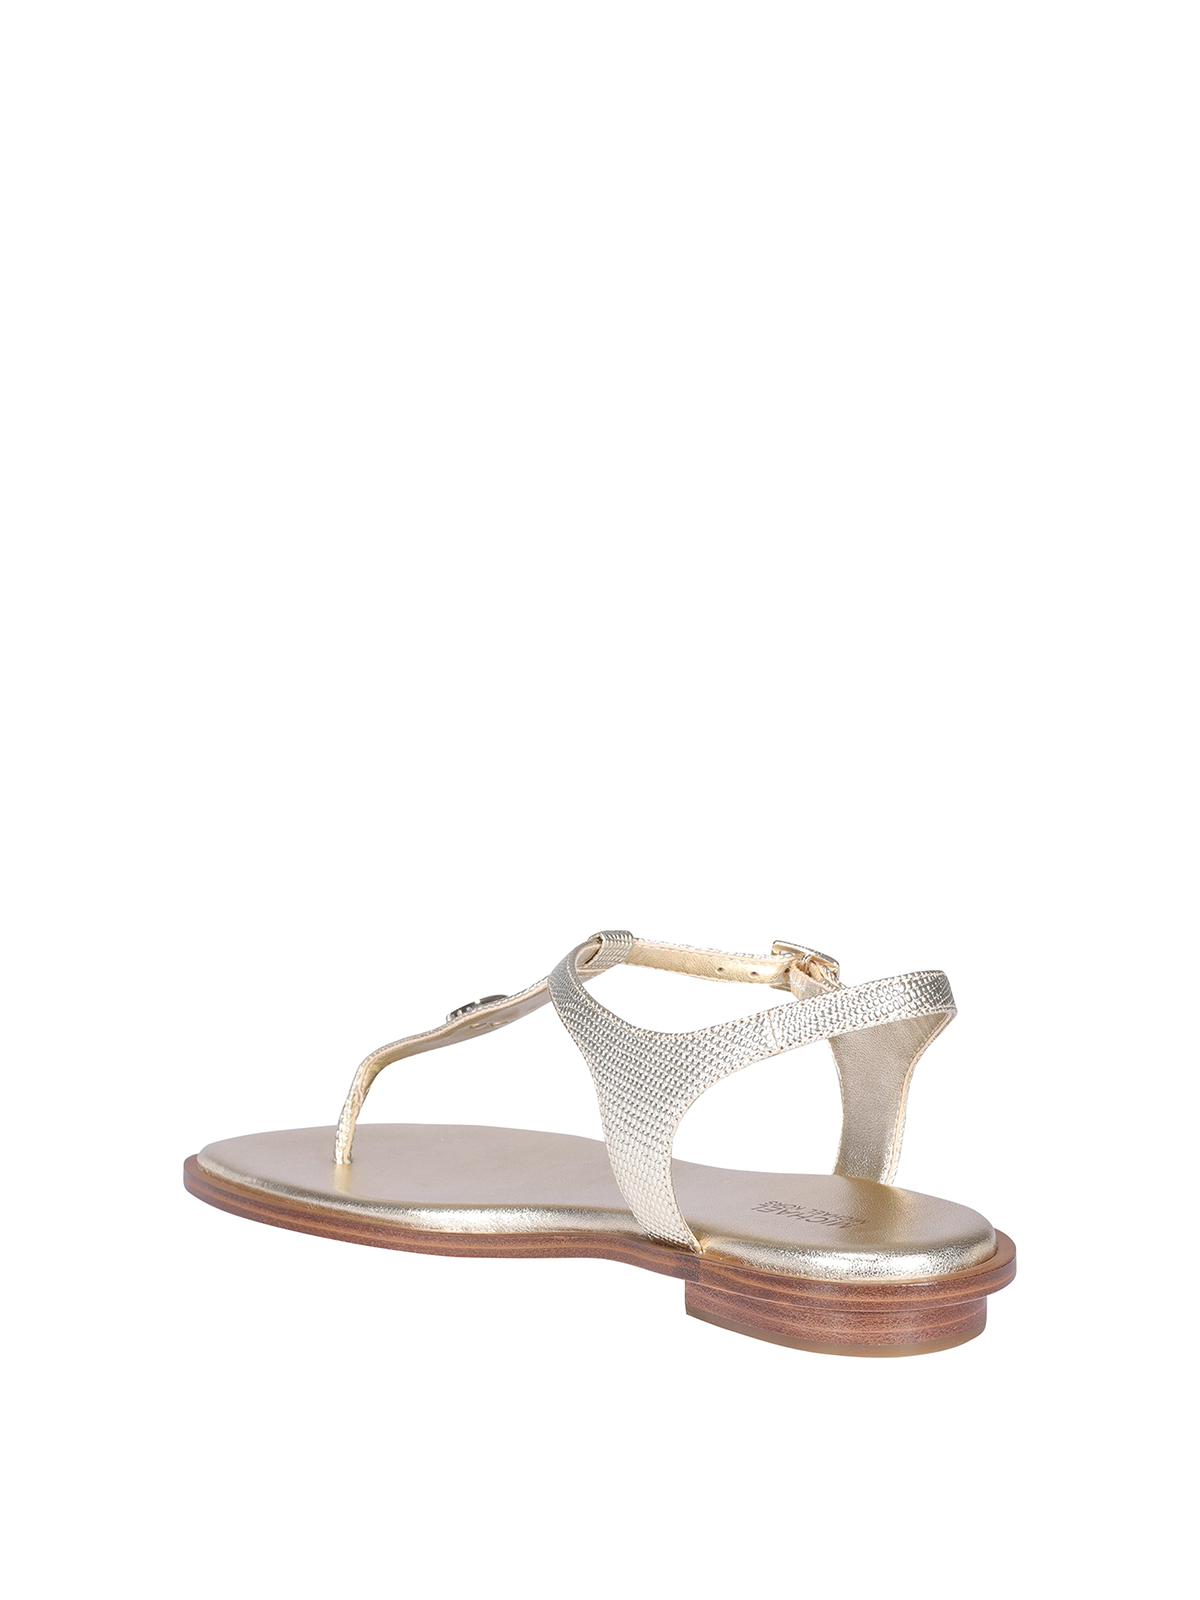 Sandals Michael Kors - Mallory sandals - 40S1MAFA1M740 | iKRIX.com